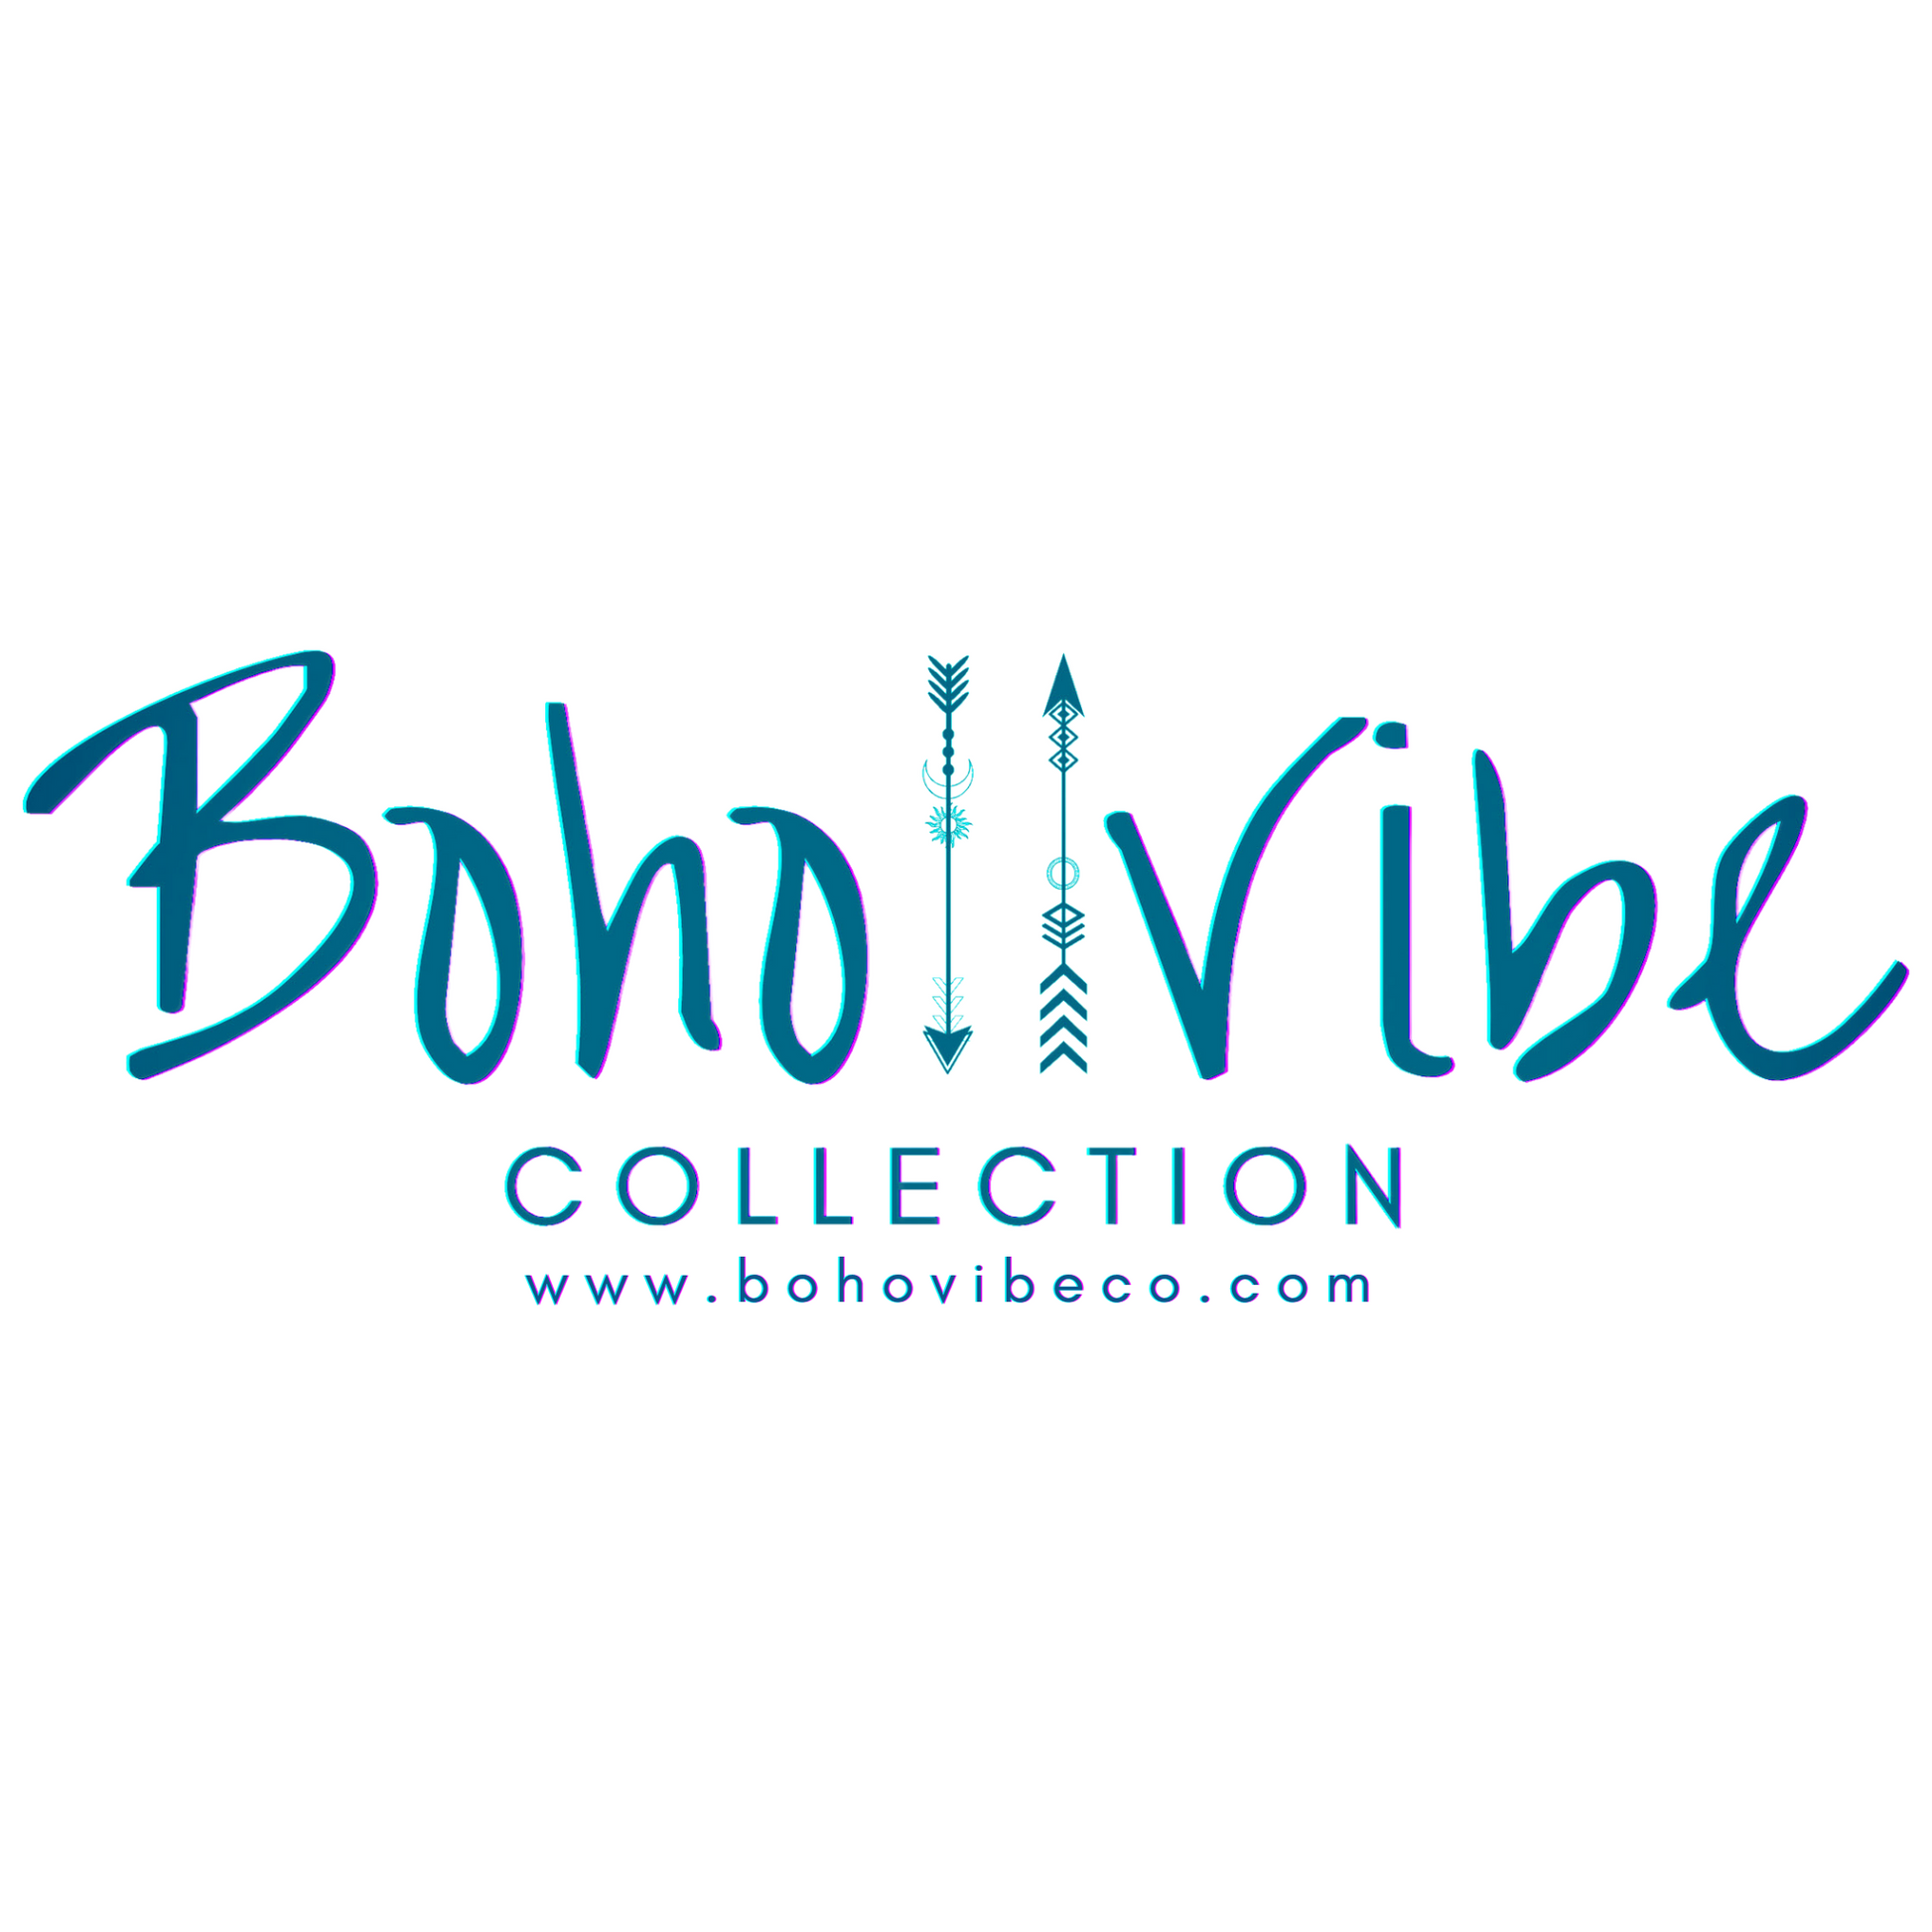 Boho ↡↟ Vibe Collection ↠ Retro Trike Progear RideFree Coastal Ladies Kids Blue Tricycle